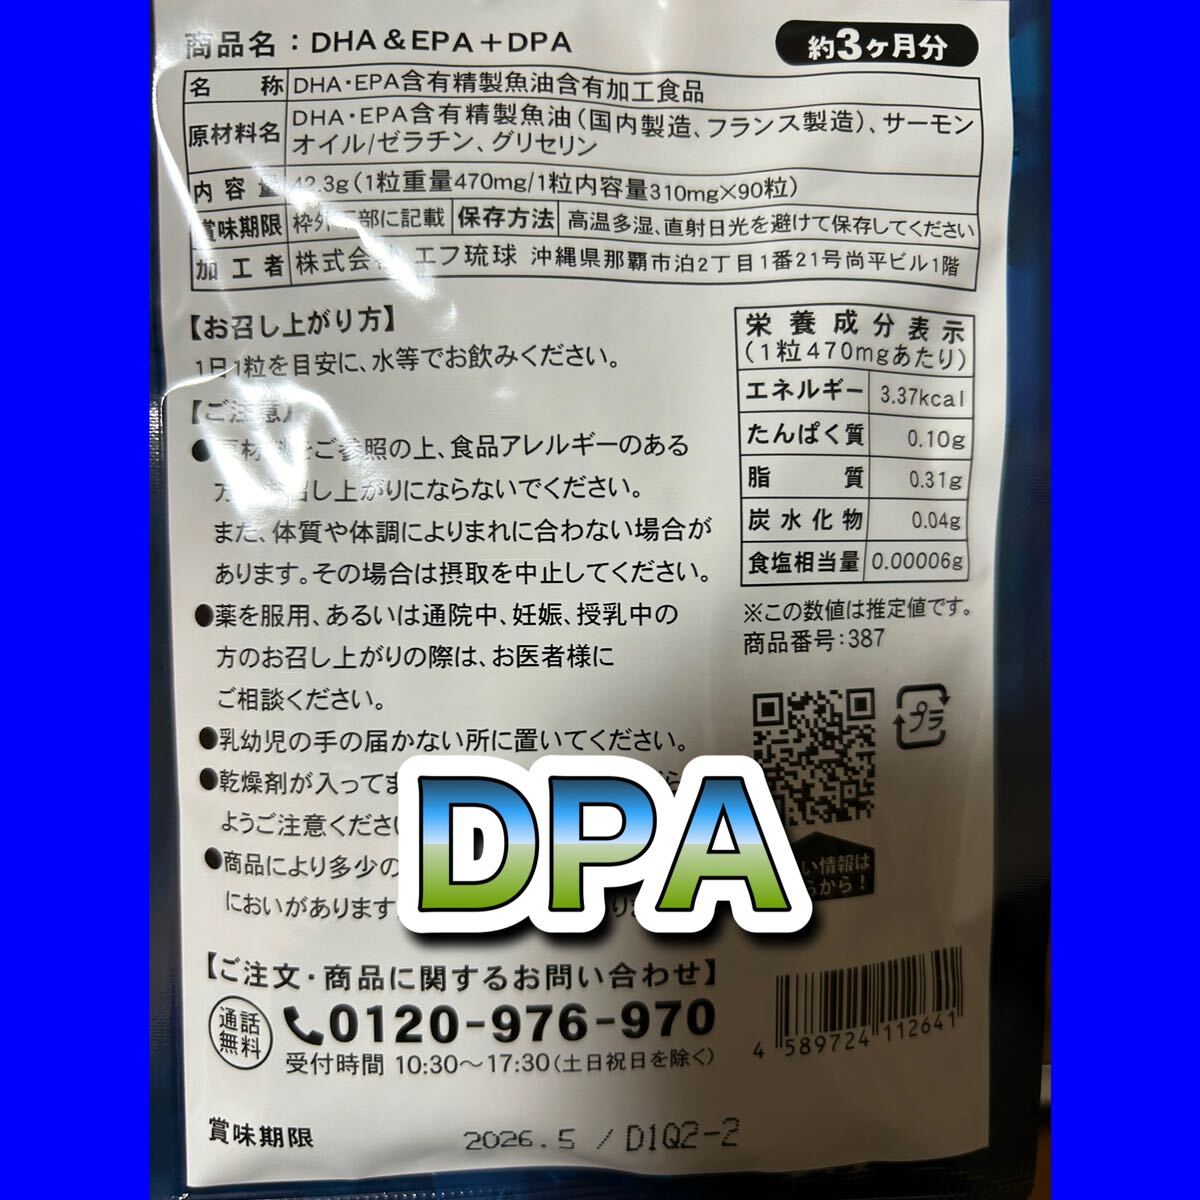 775*DHA&EPA+DPA*si-do Coms 